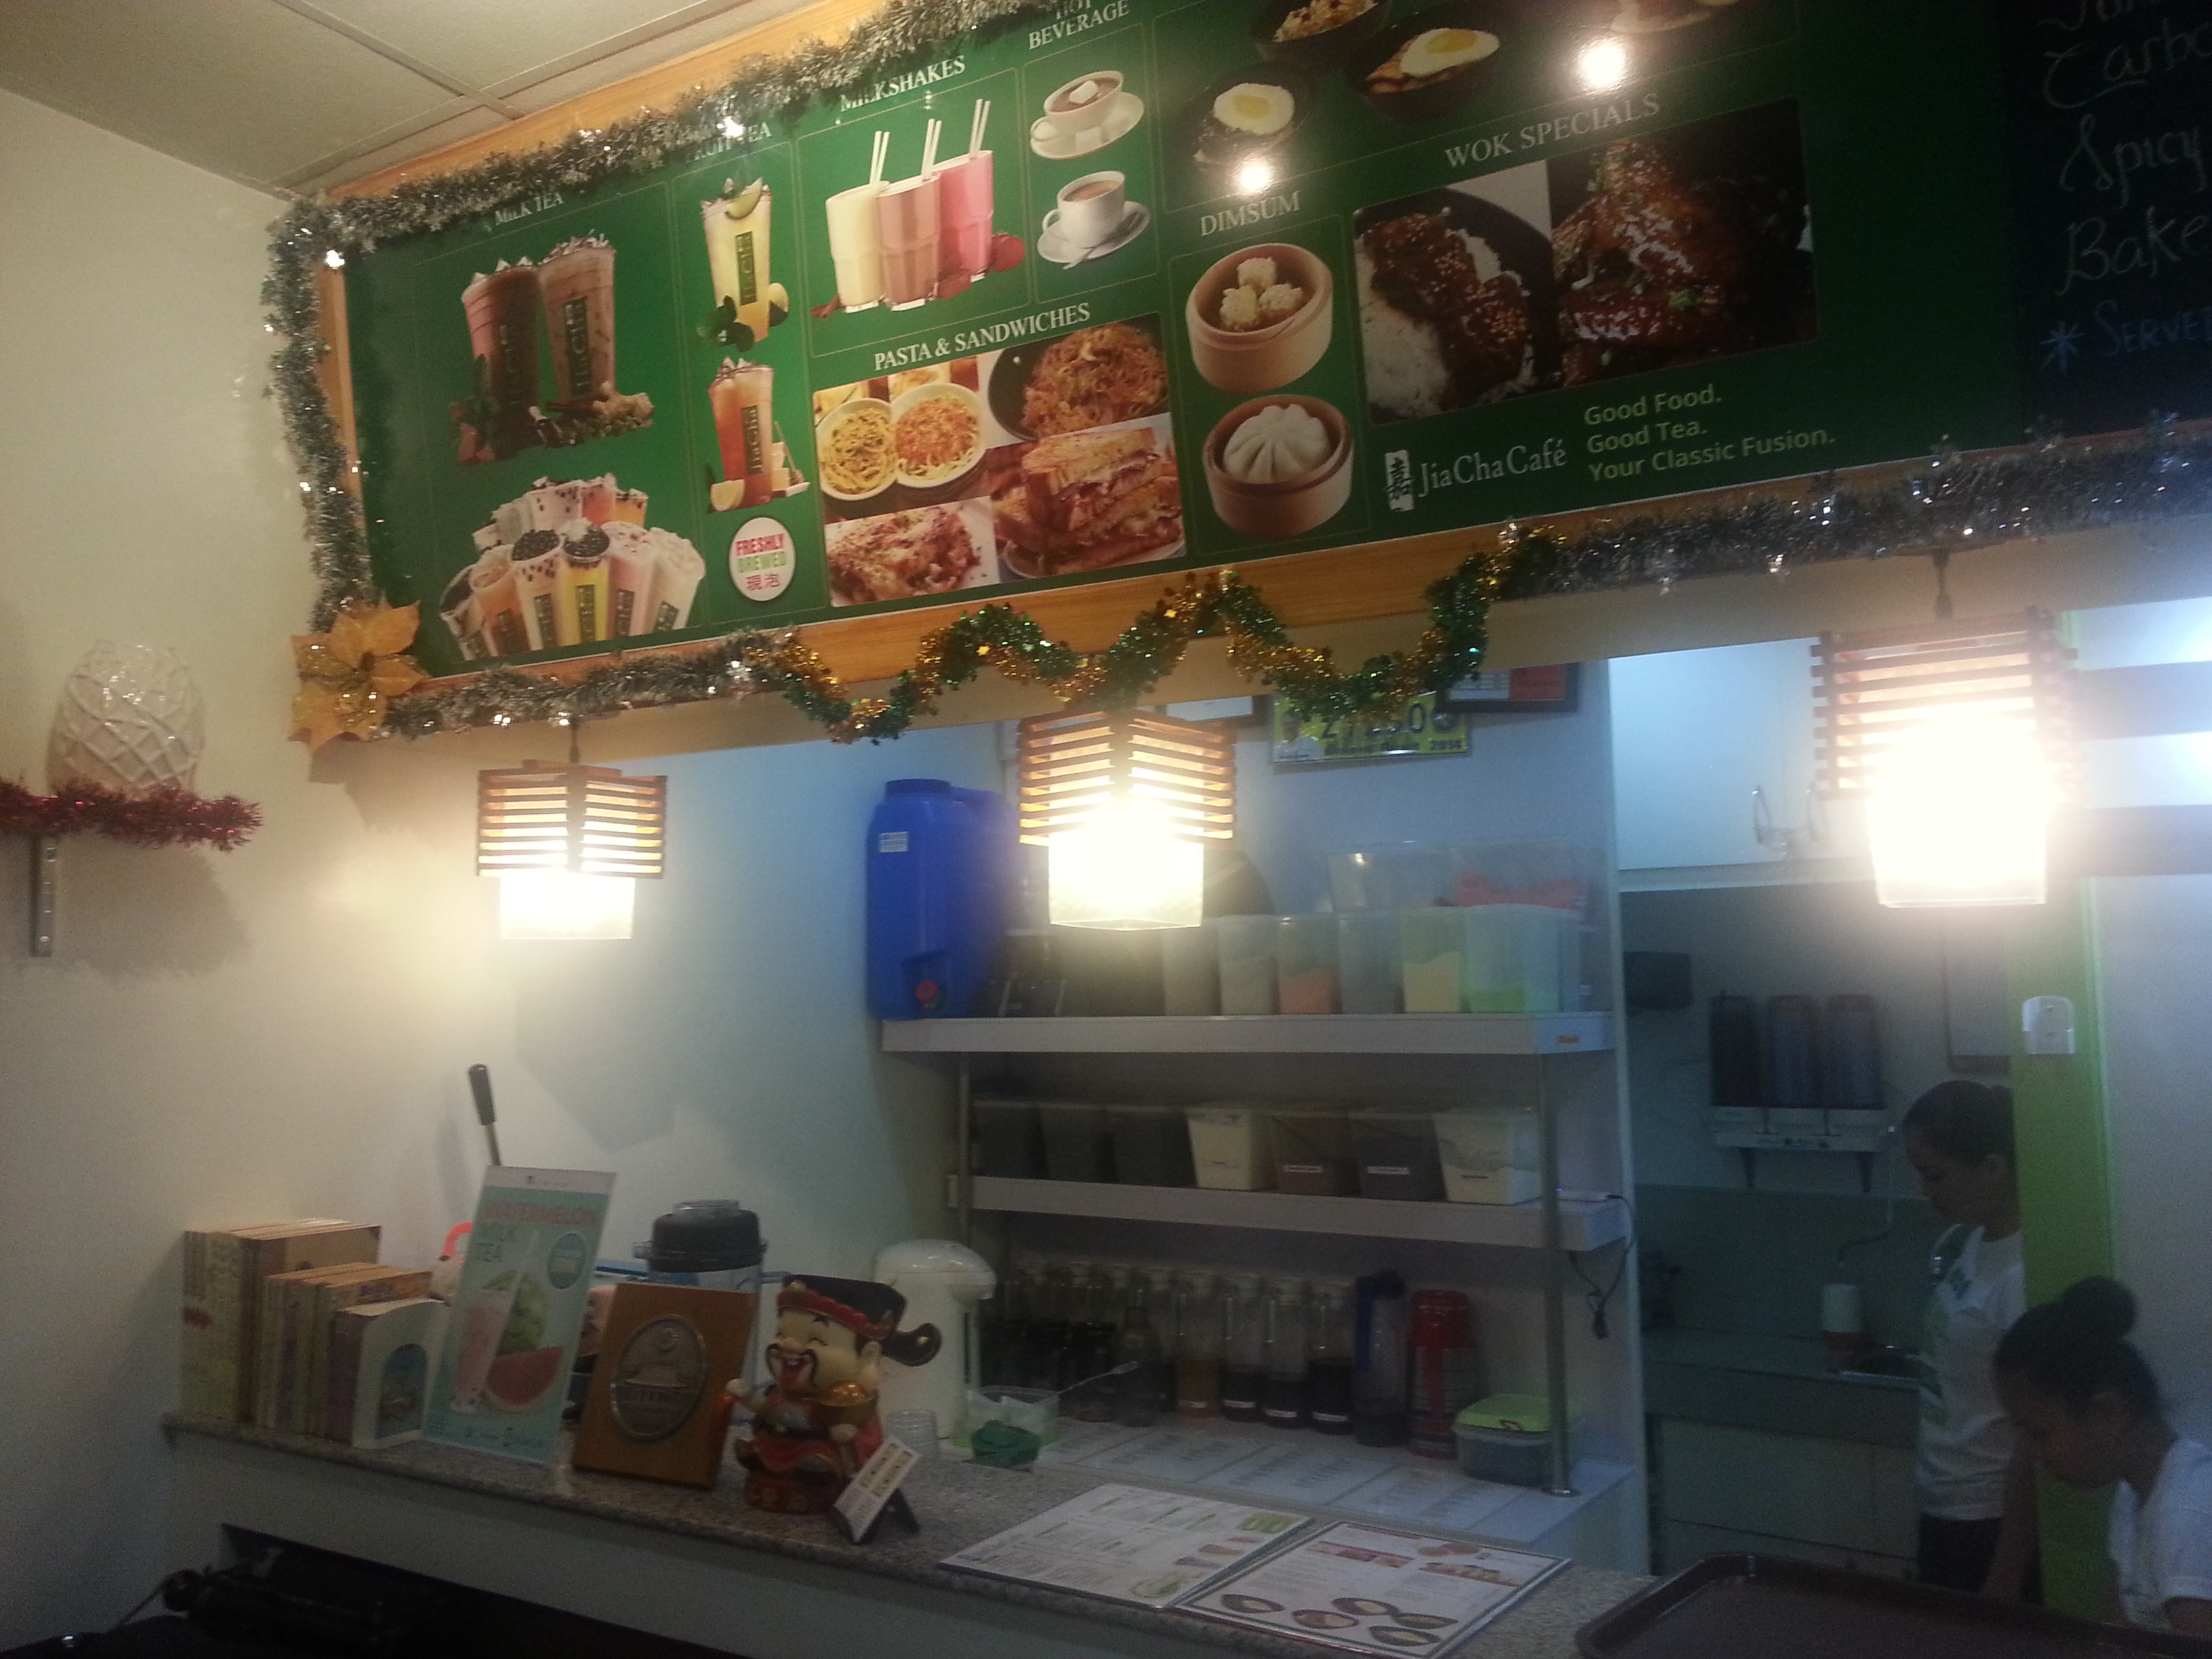 Milk teas and wok specials at Jia Cha Cafe CDO